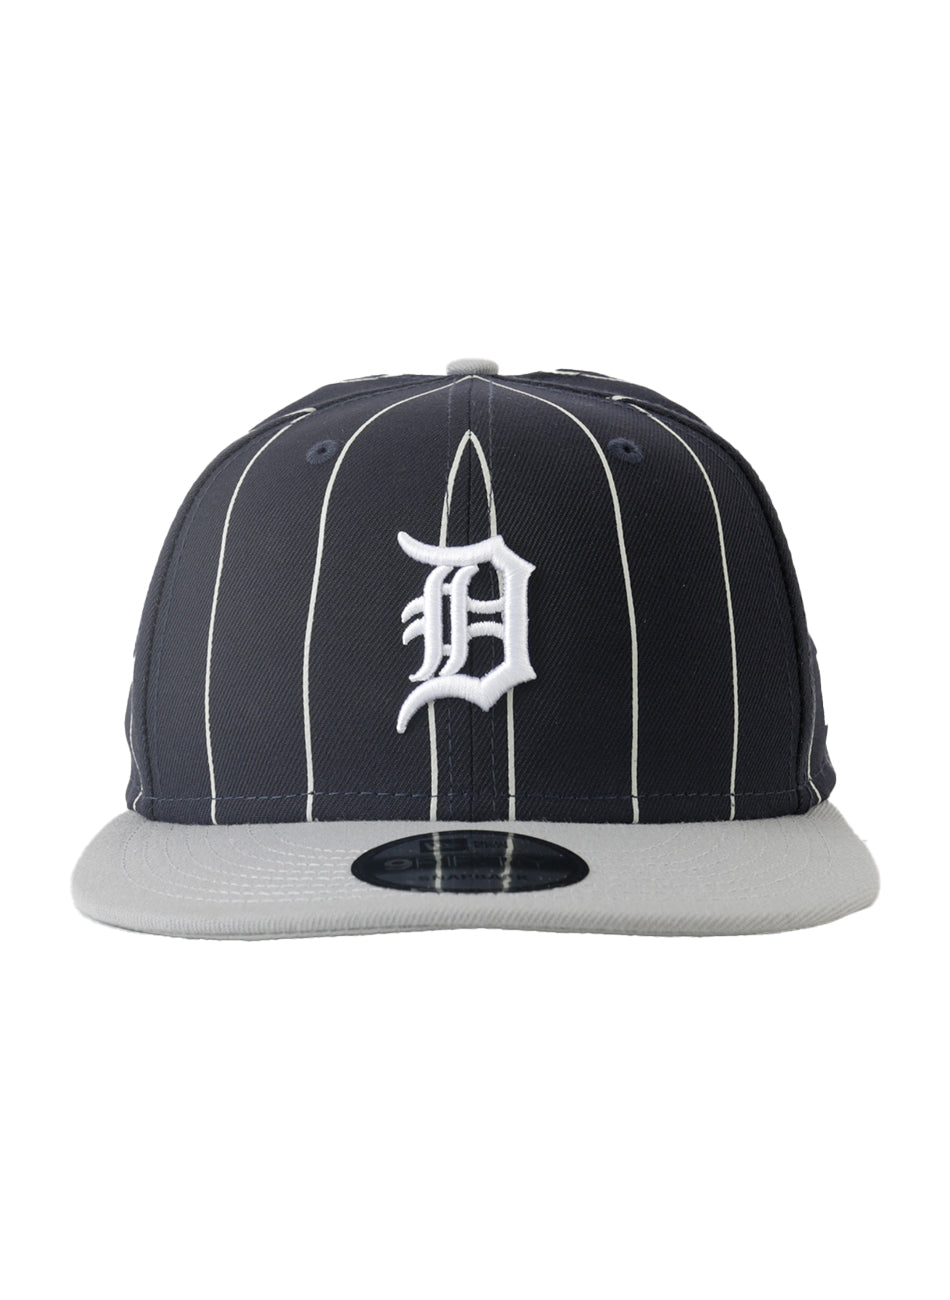 Detroit Tigers Vintage Pinstripe OTC 950 Snap-Back Hat